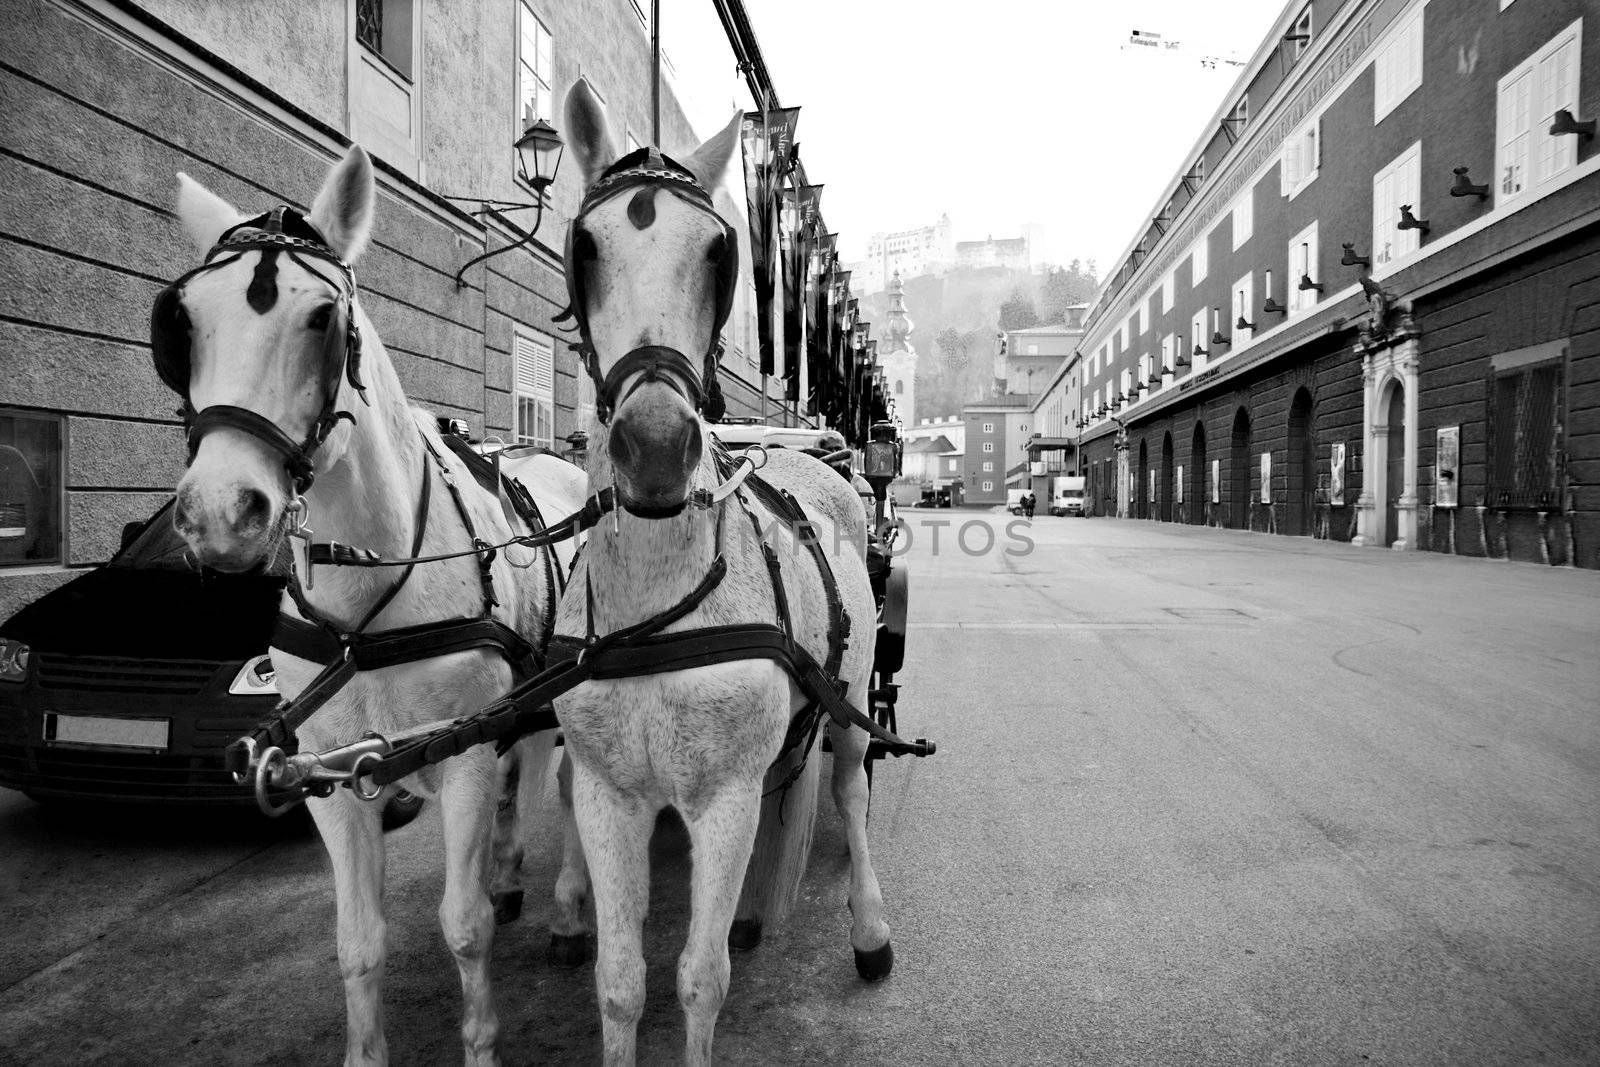 Riding horses in city center of Salzburg, Austria by evgeshag